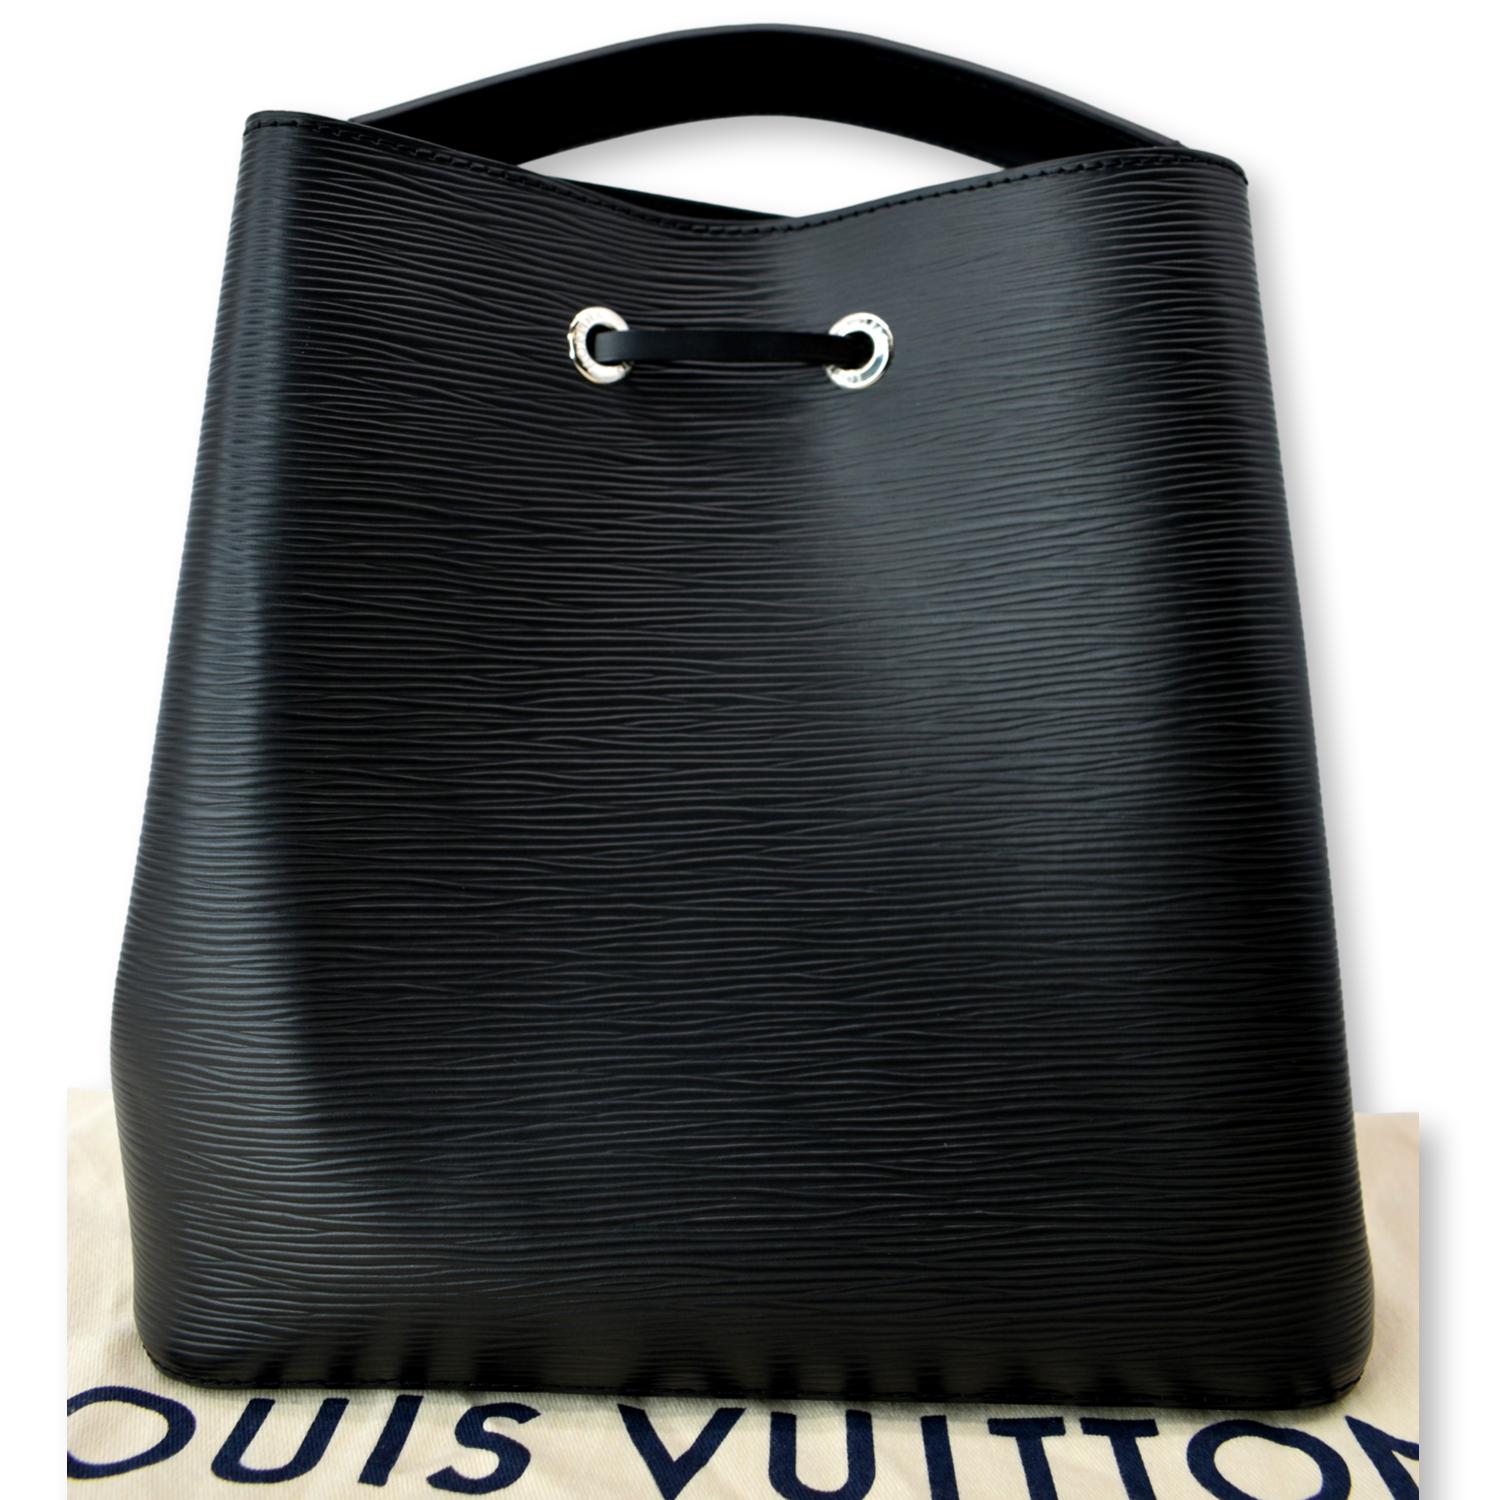 Louis Vuitton NeoNoe Epi Noir Black